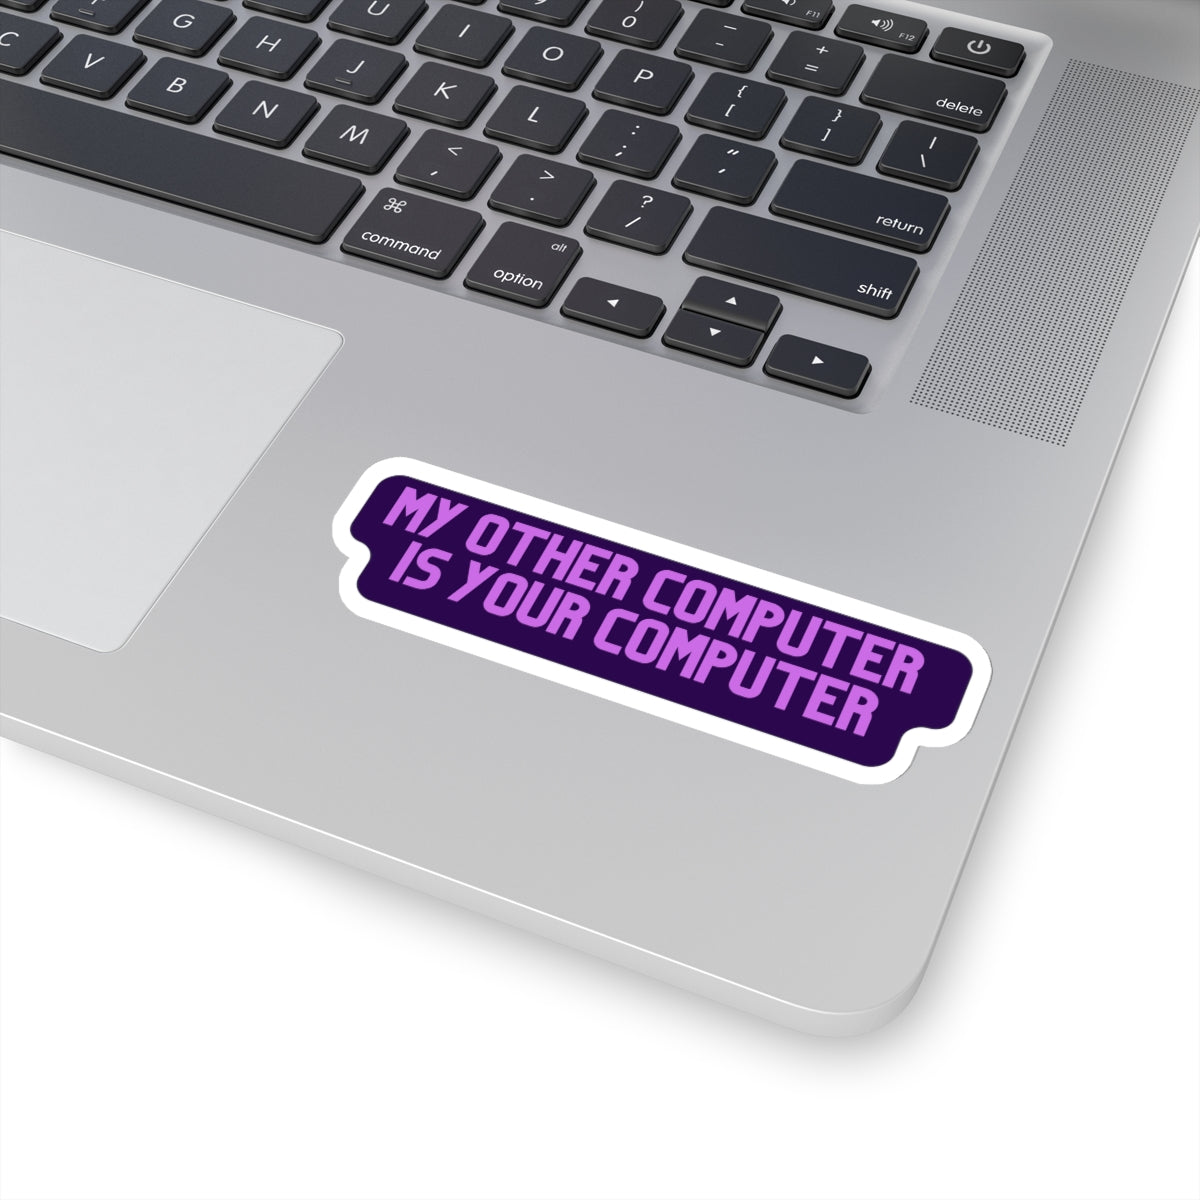 My other computer is your computer - Developer / Programmer / Software Engineer Kiss Cut Sticker